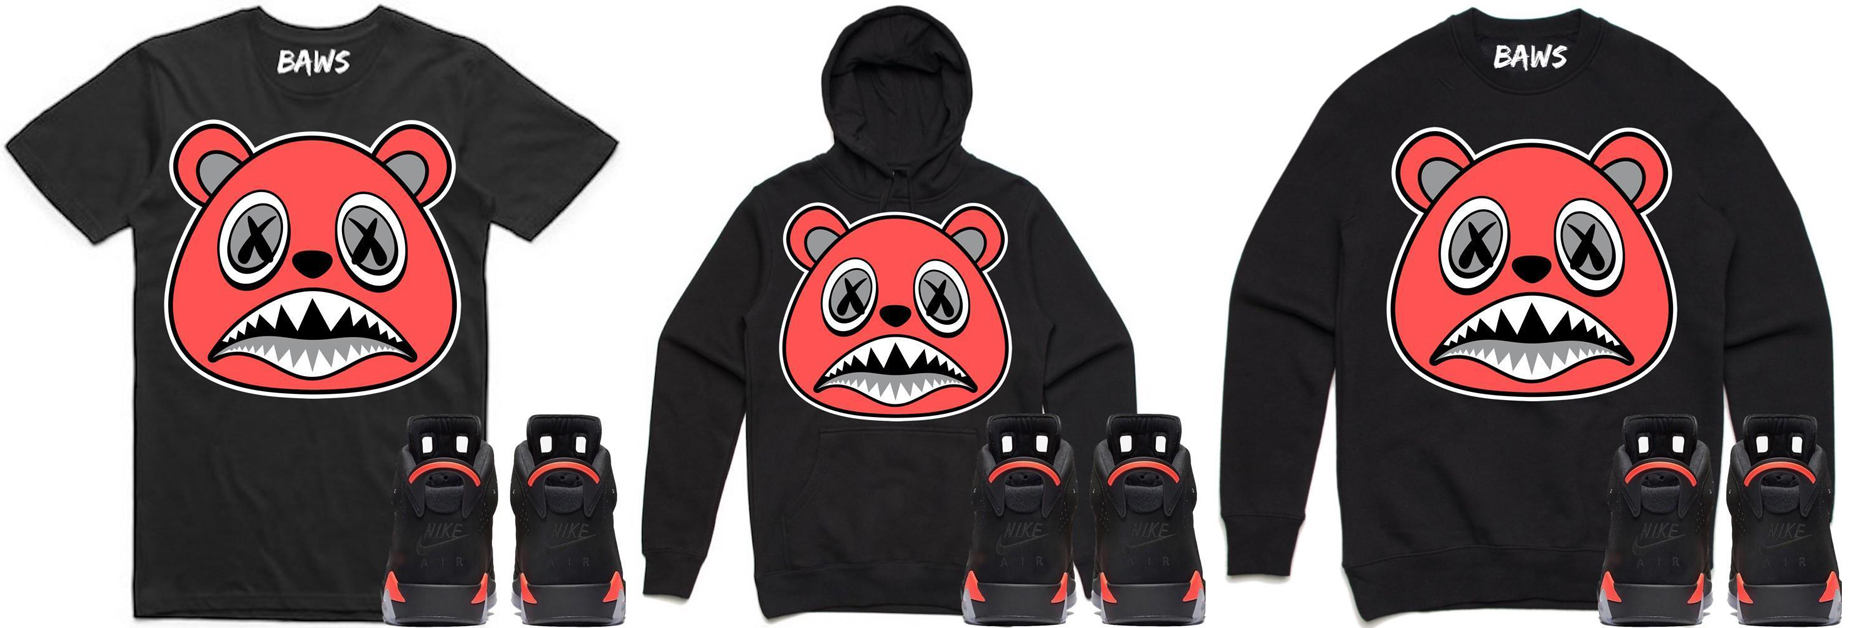 Jordan 6 Black Infrared 2019 Sneaker Clothing Match | SneakerFits.com